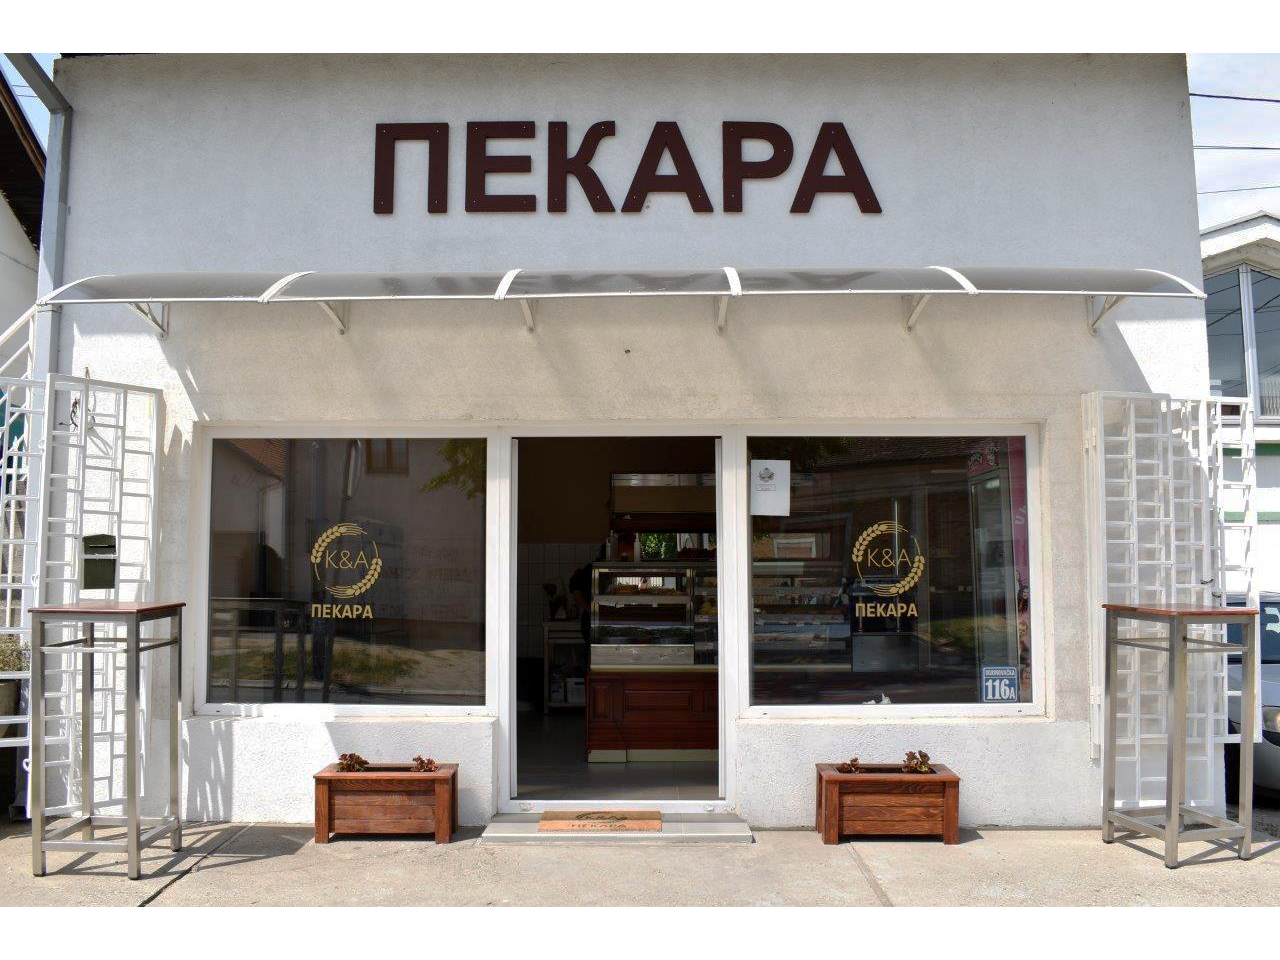 KETERING I PEKARA K&A Pekare Beograd